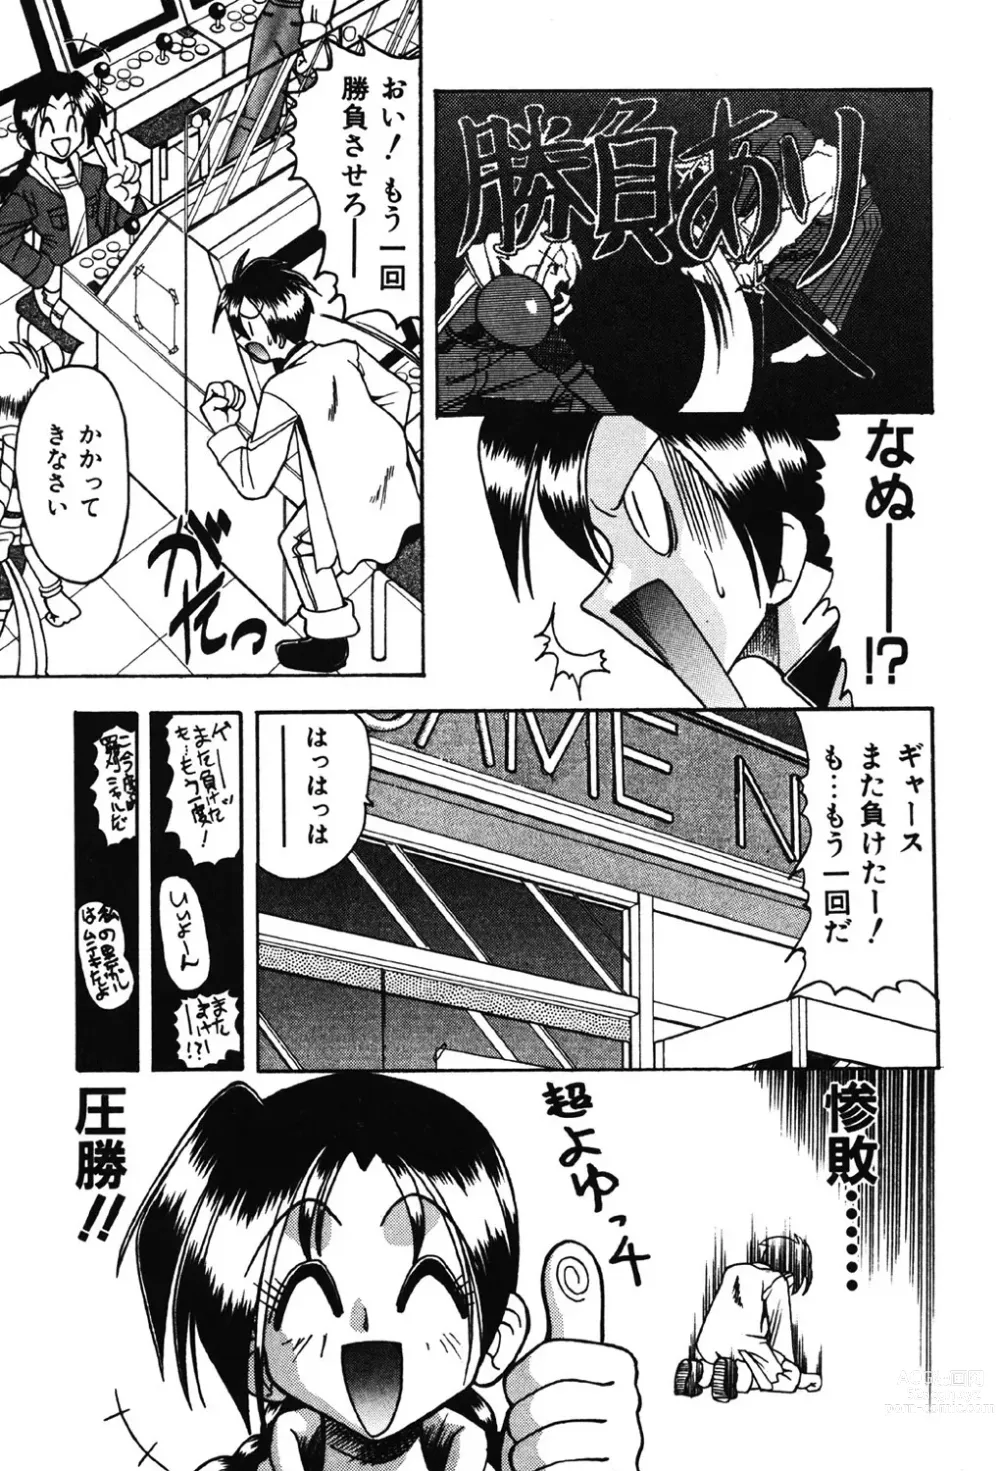 Page 132 of manga Hahaoya Ga Onna Ni Naru Toki